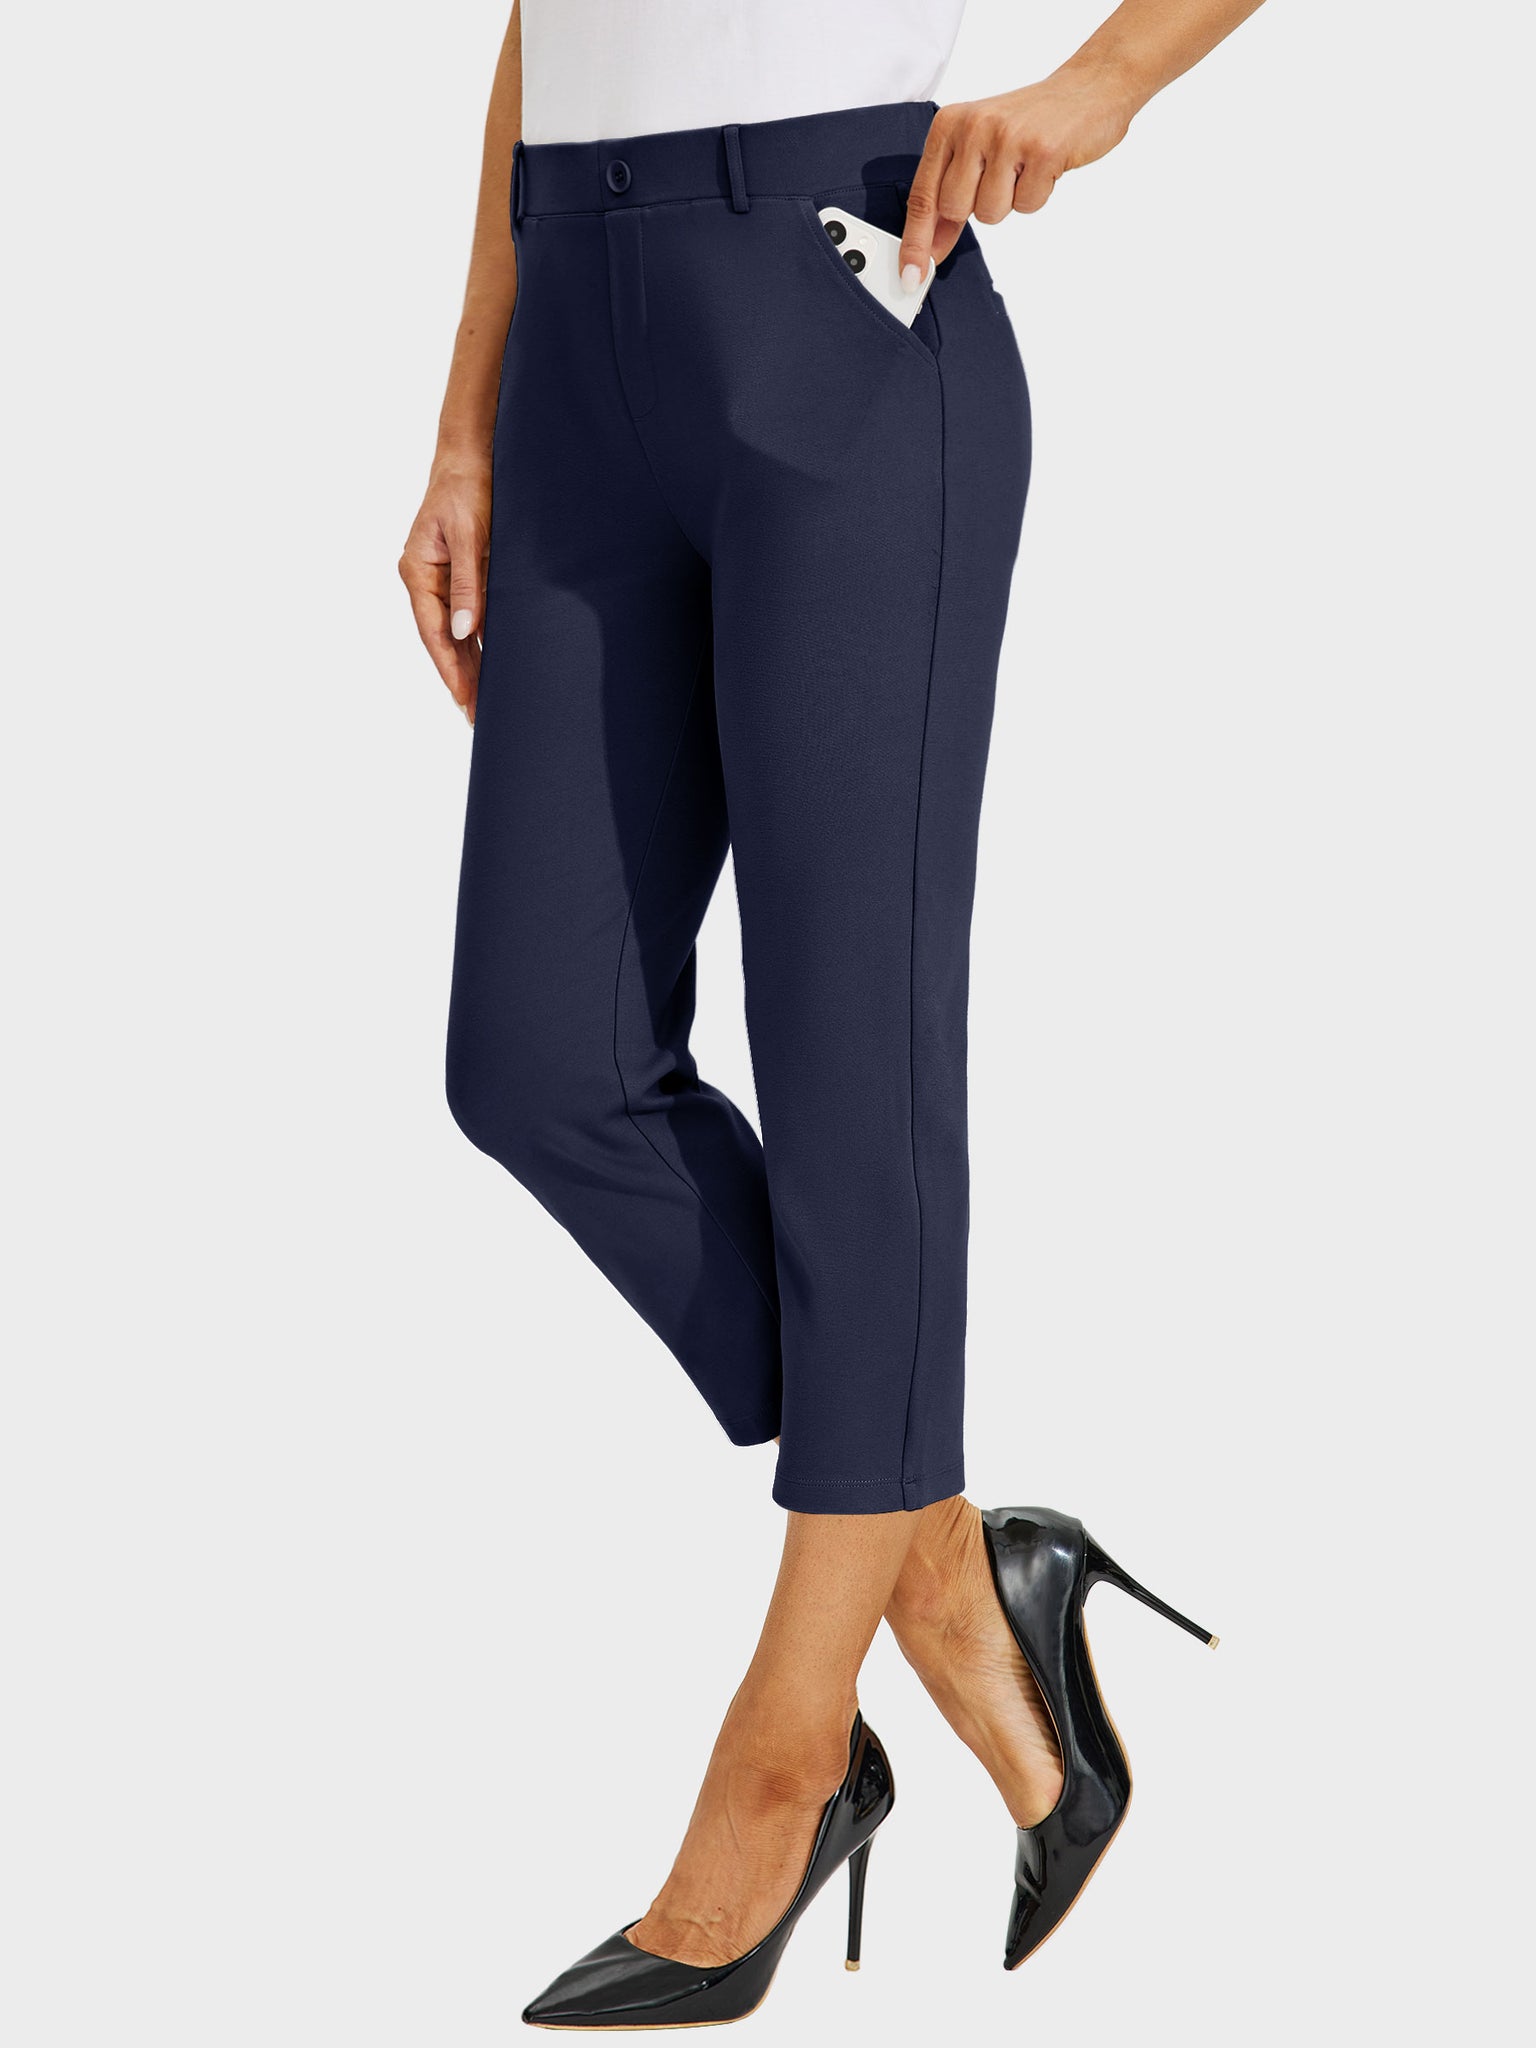 Women's Stretch Capri Yoga Dress Pants_Navy_model3